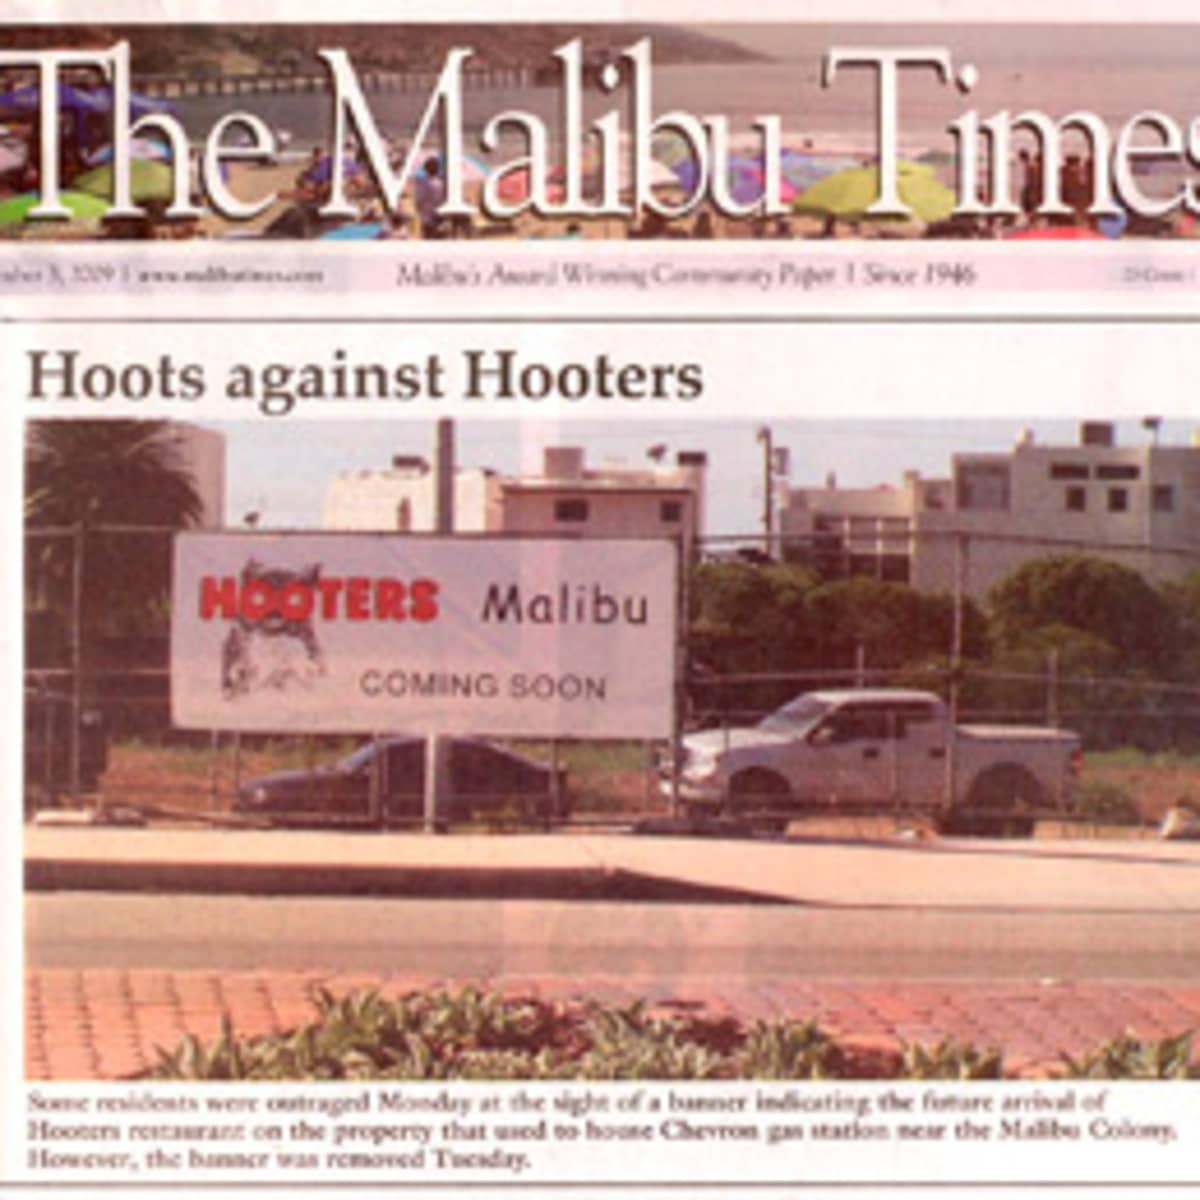 The Malibu Times